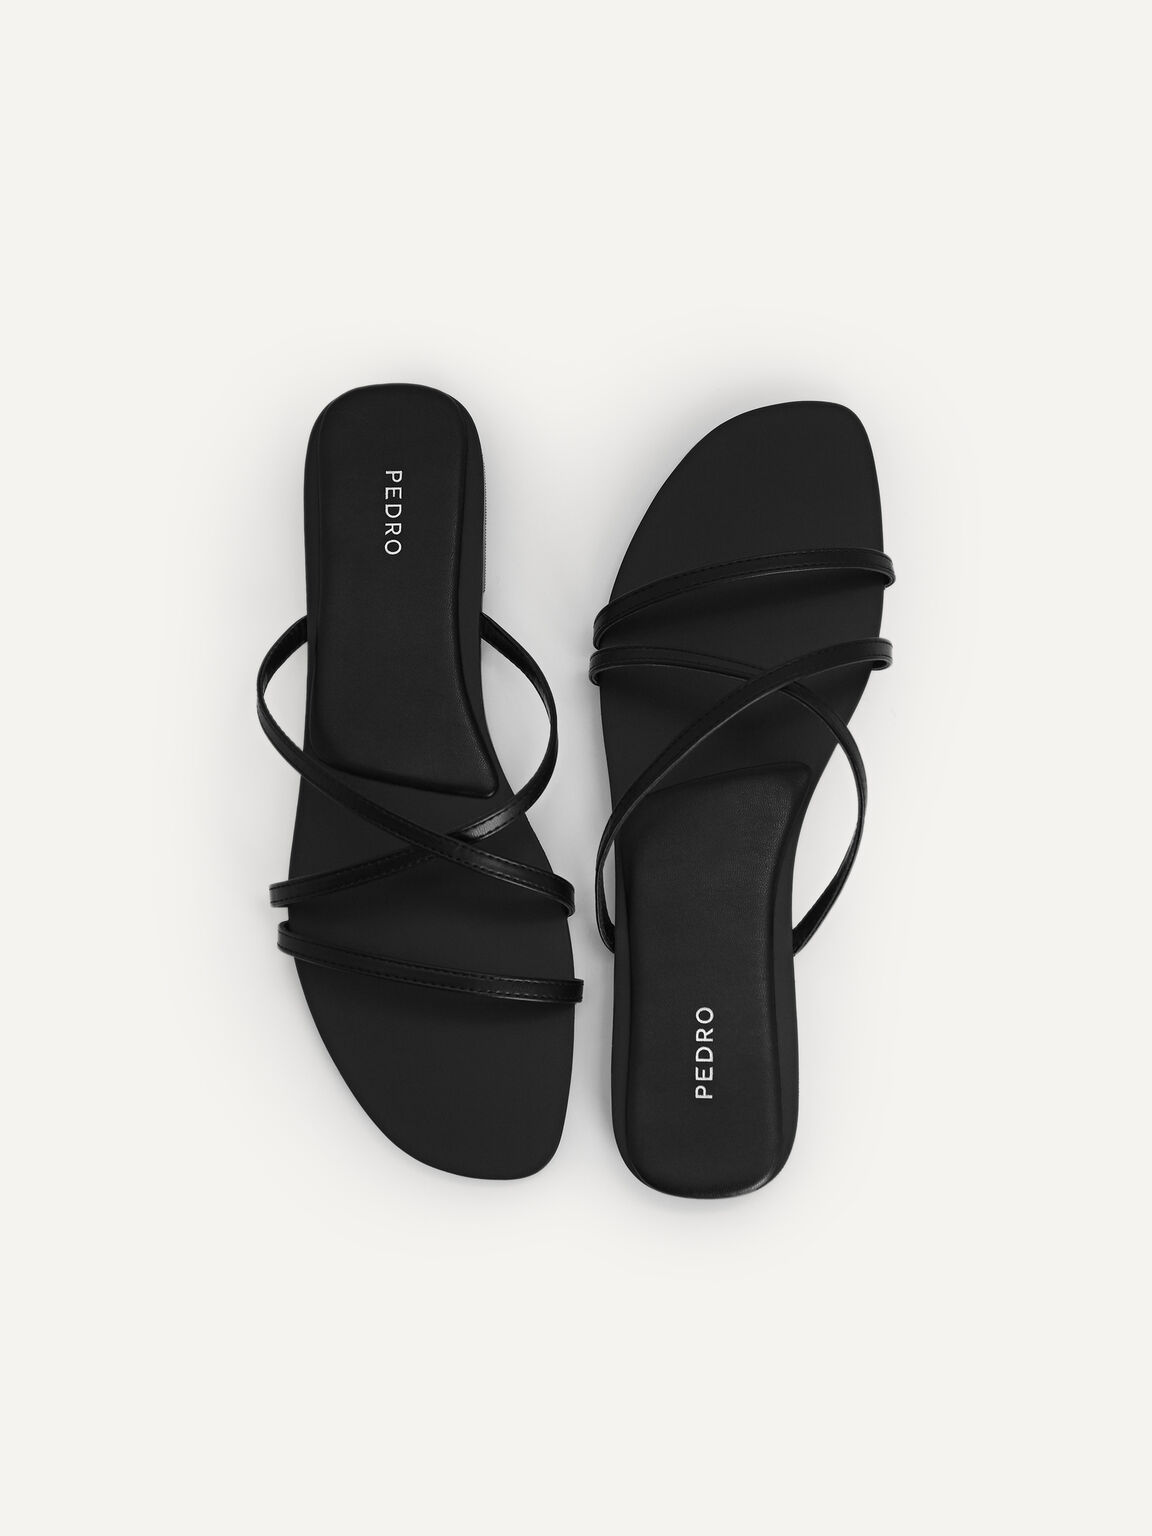 Criss-Cross Strappy Sandals, Black